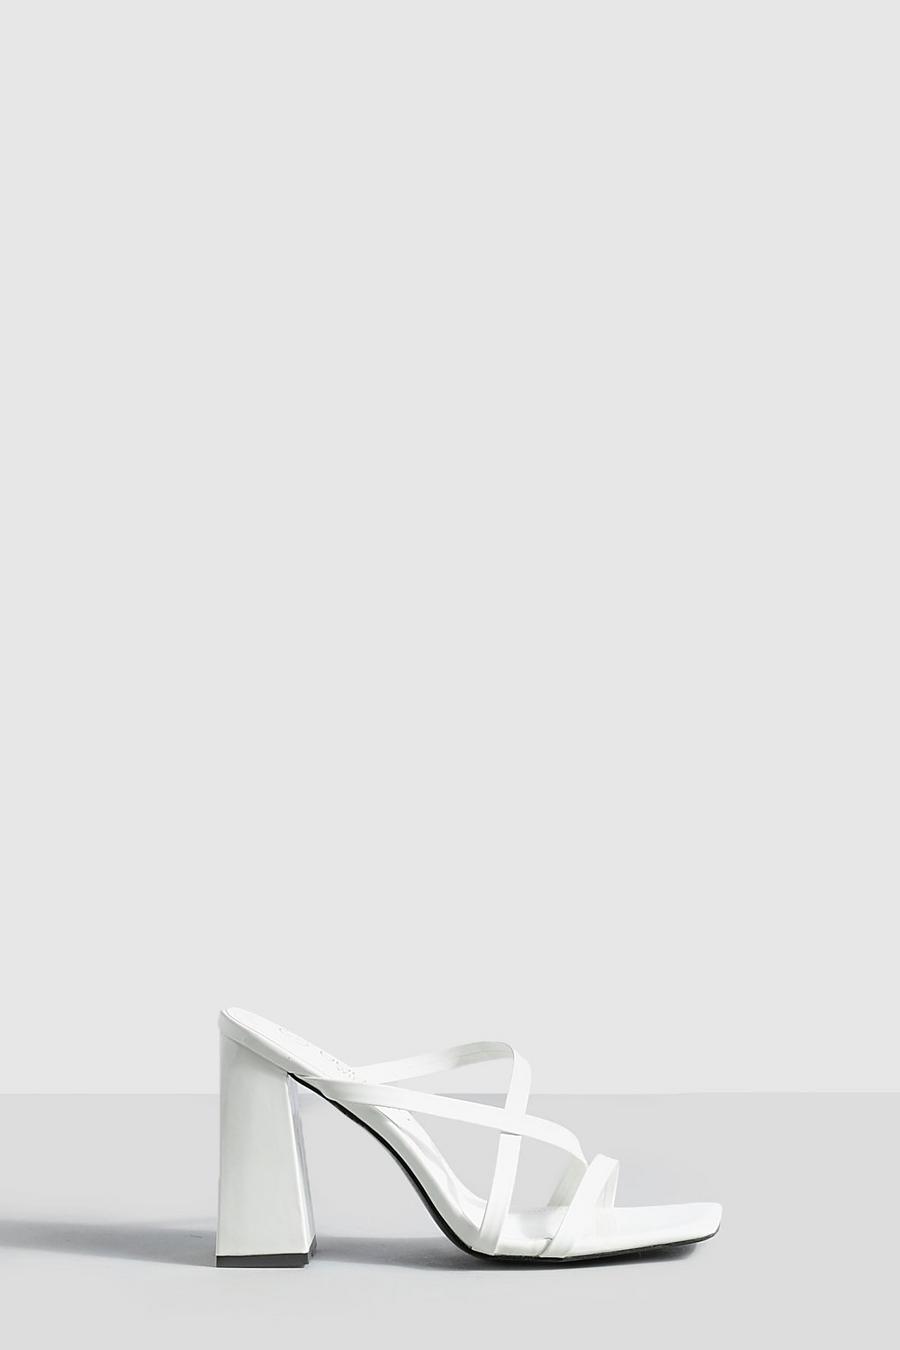 Sandali Mules a calzata ampia a punta quadrata con tacco a blocco, White